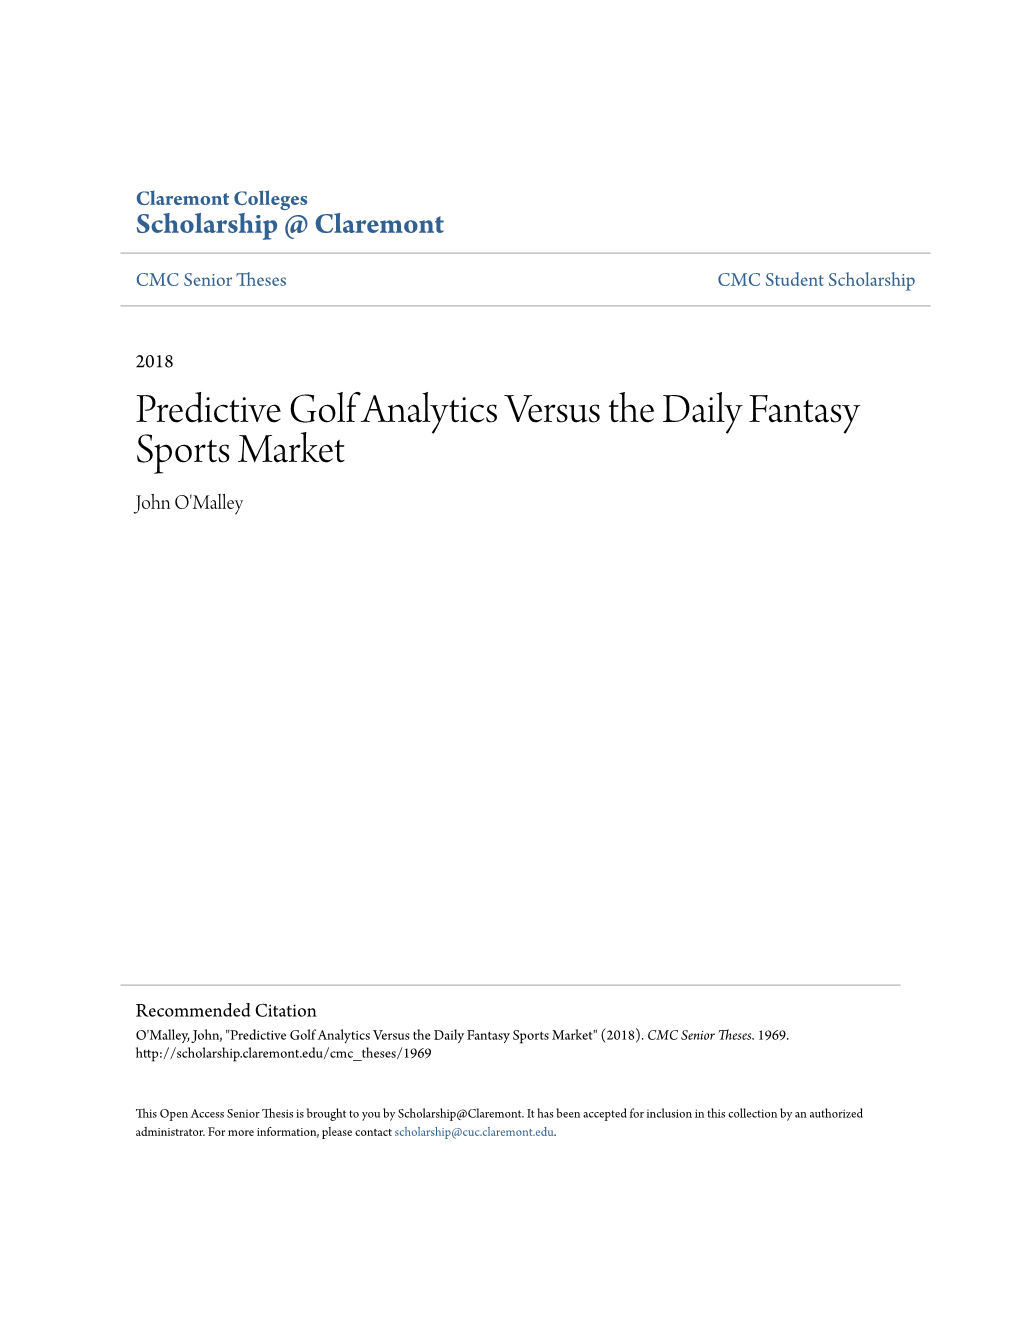 Predictive Golf Analytics Versus the Daily Fantasy Sports Market John O'malley